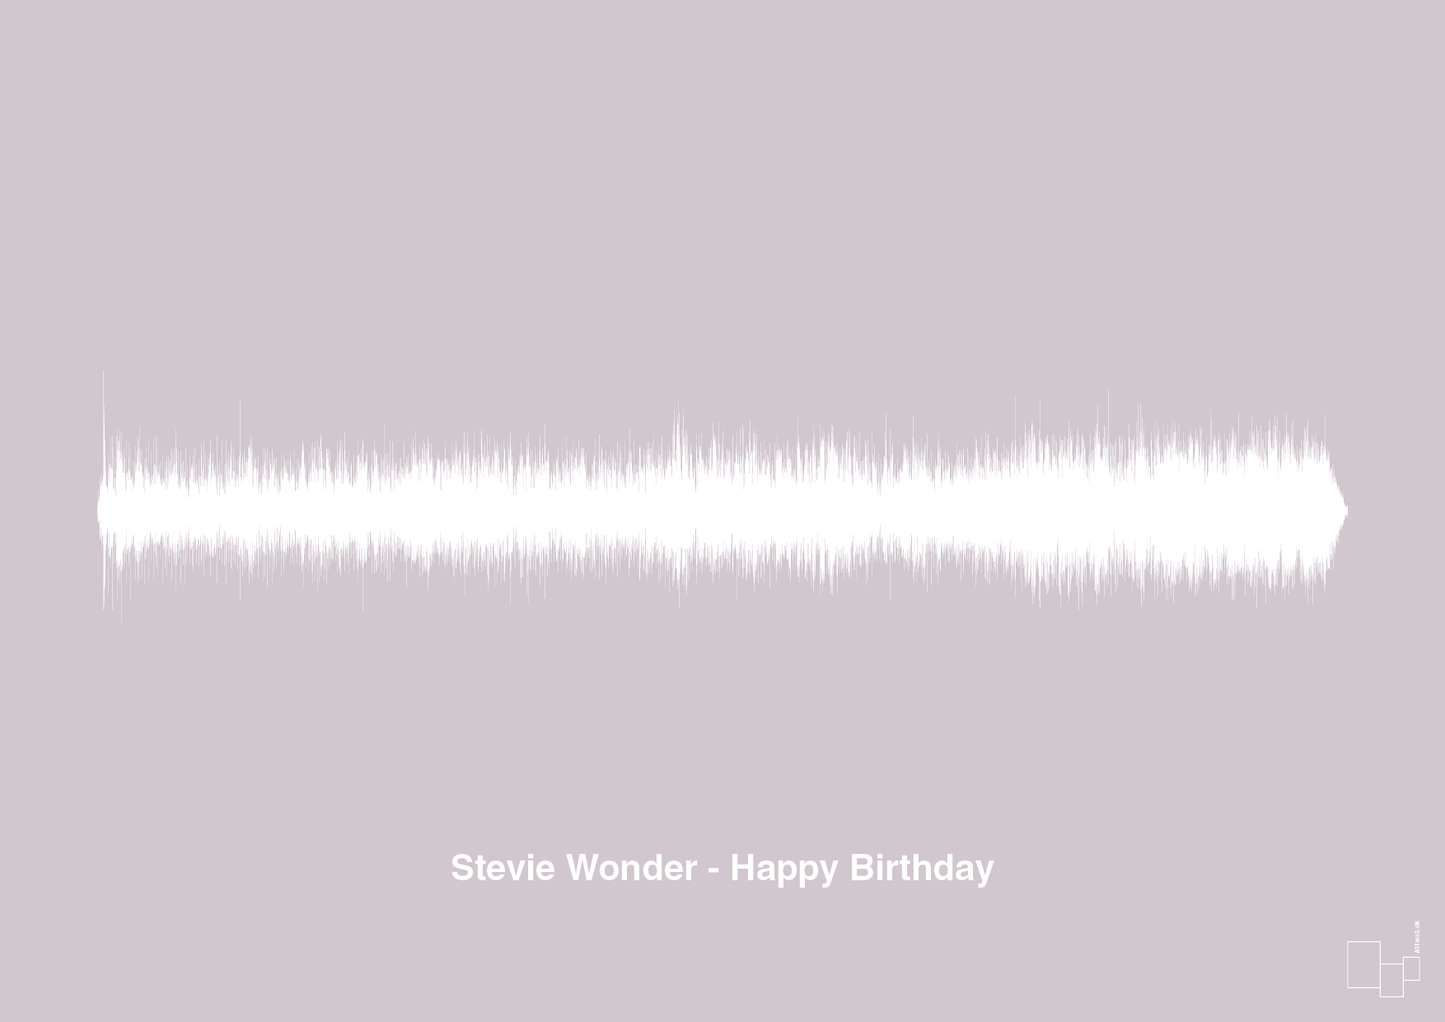 stevie wonder - happy birthday - Plakat med Musik i Dusty Lilac